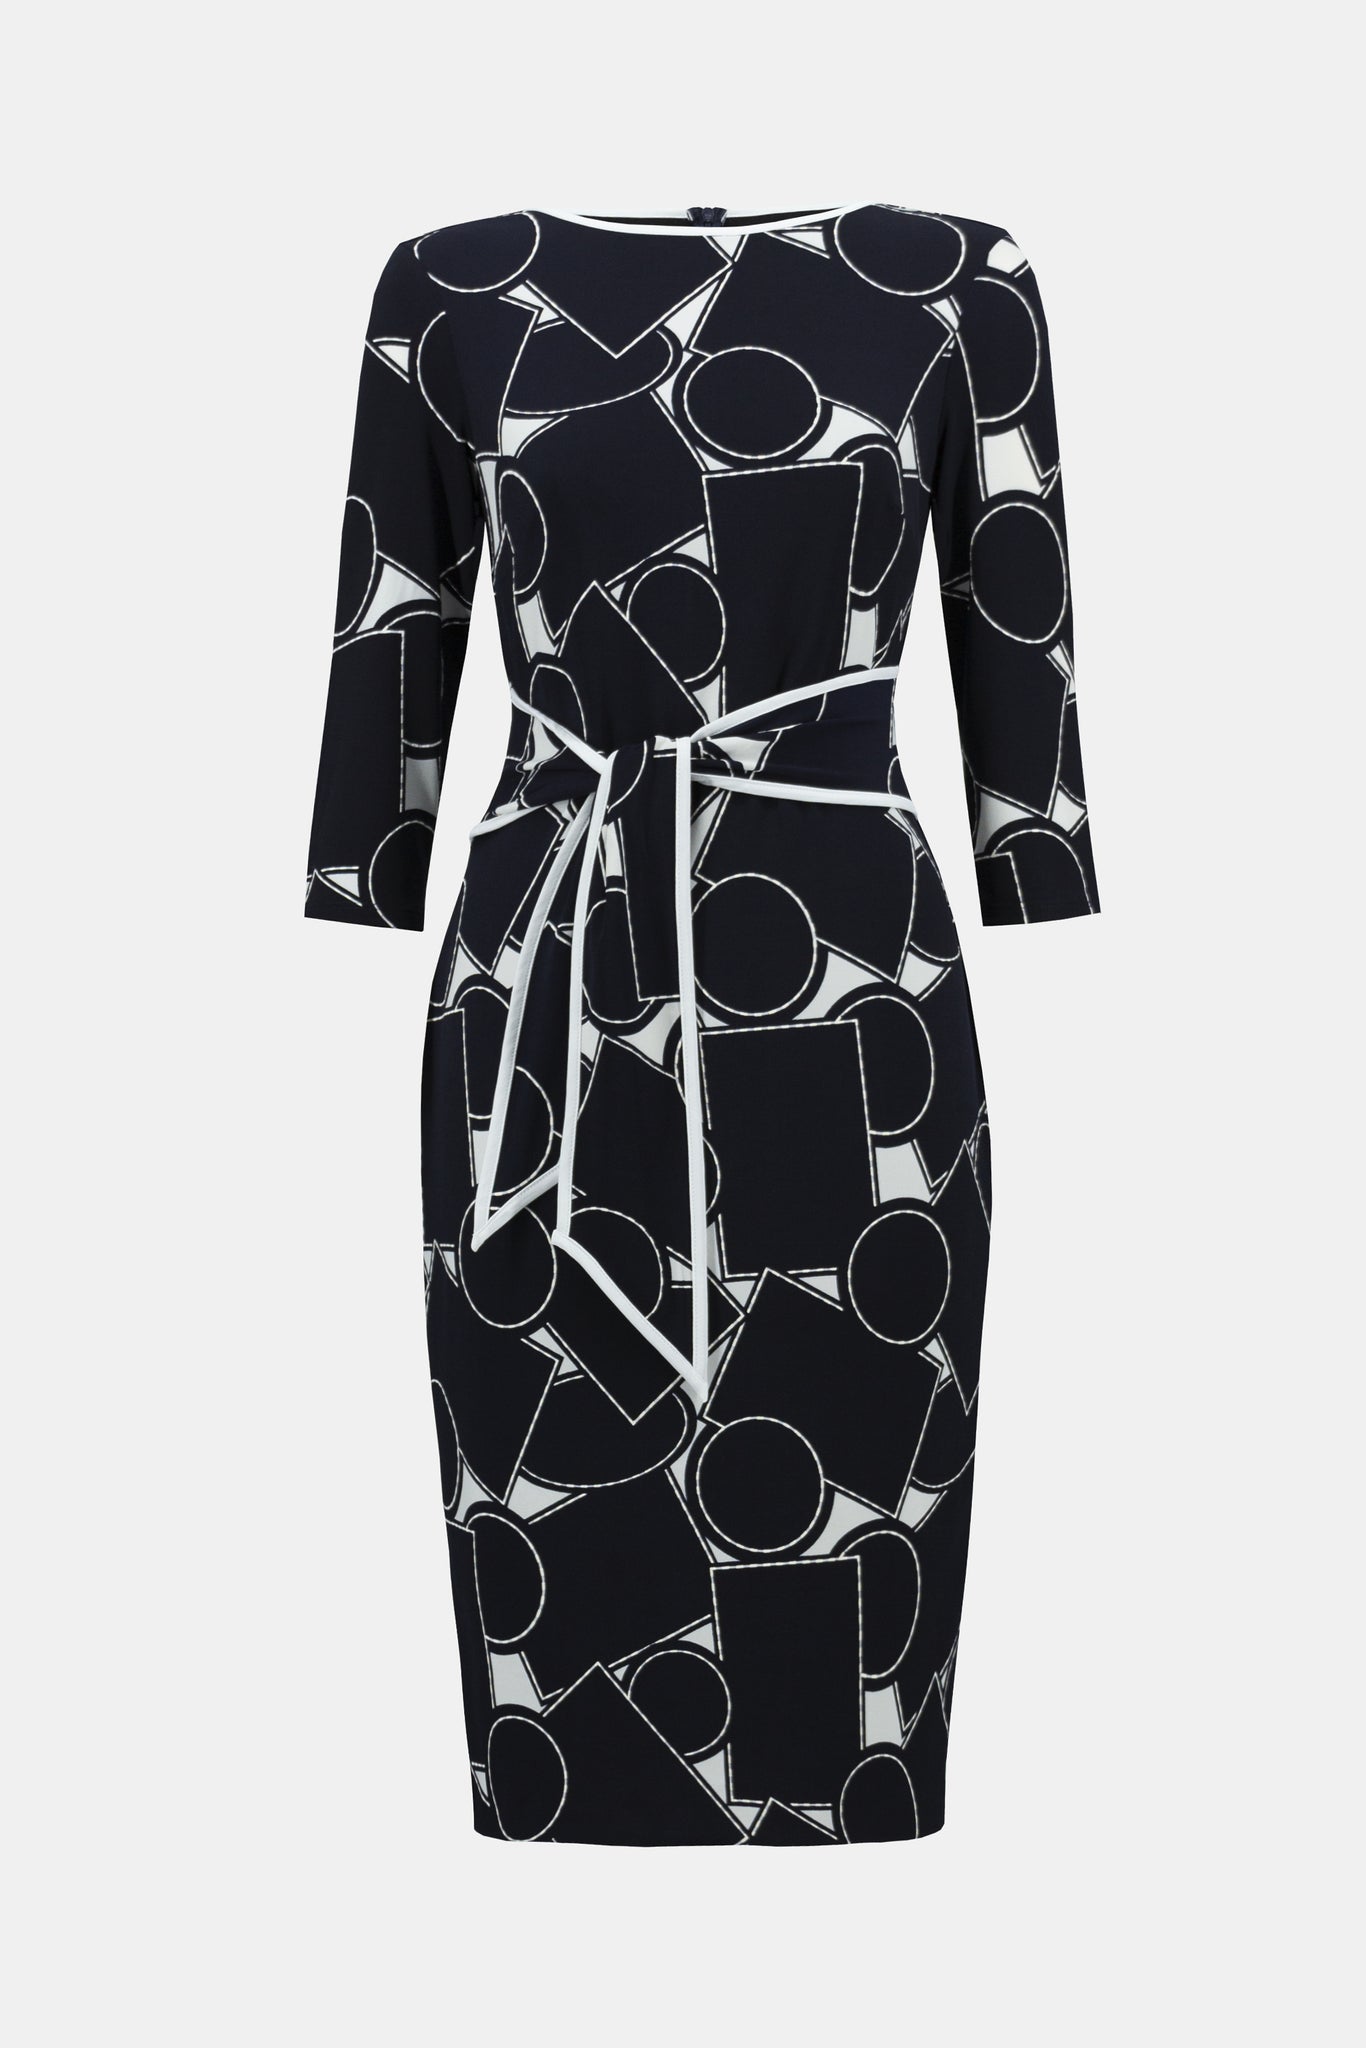 Geometric Print Silky Knit Sheath Dress. Style JR231284